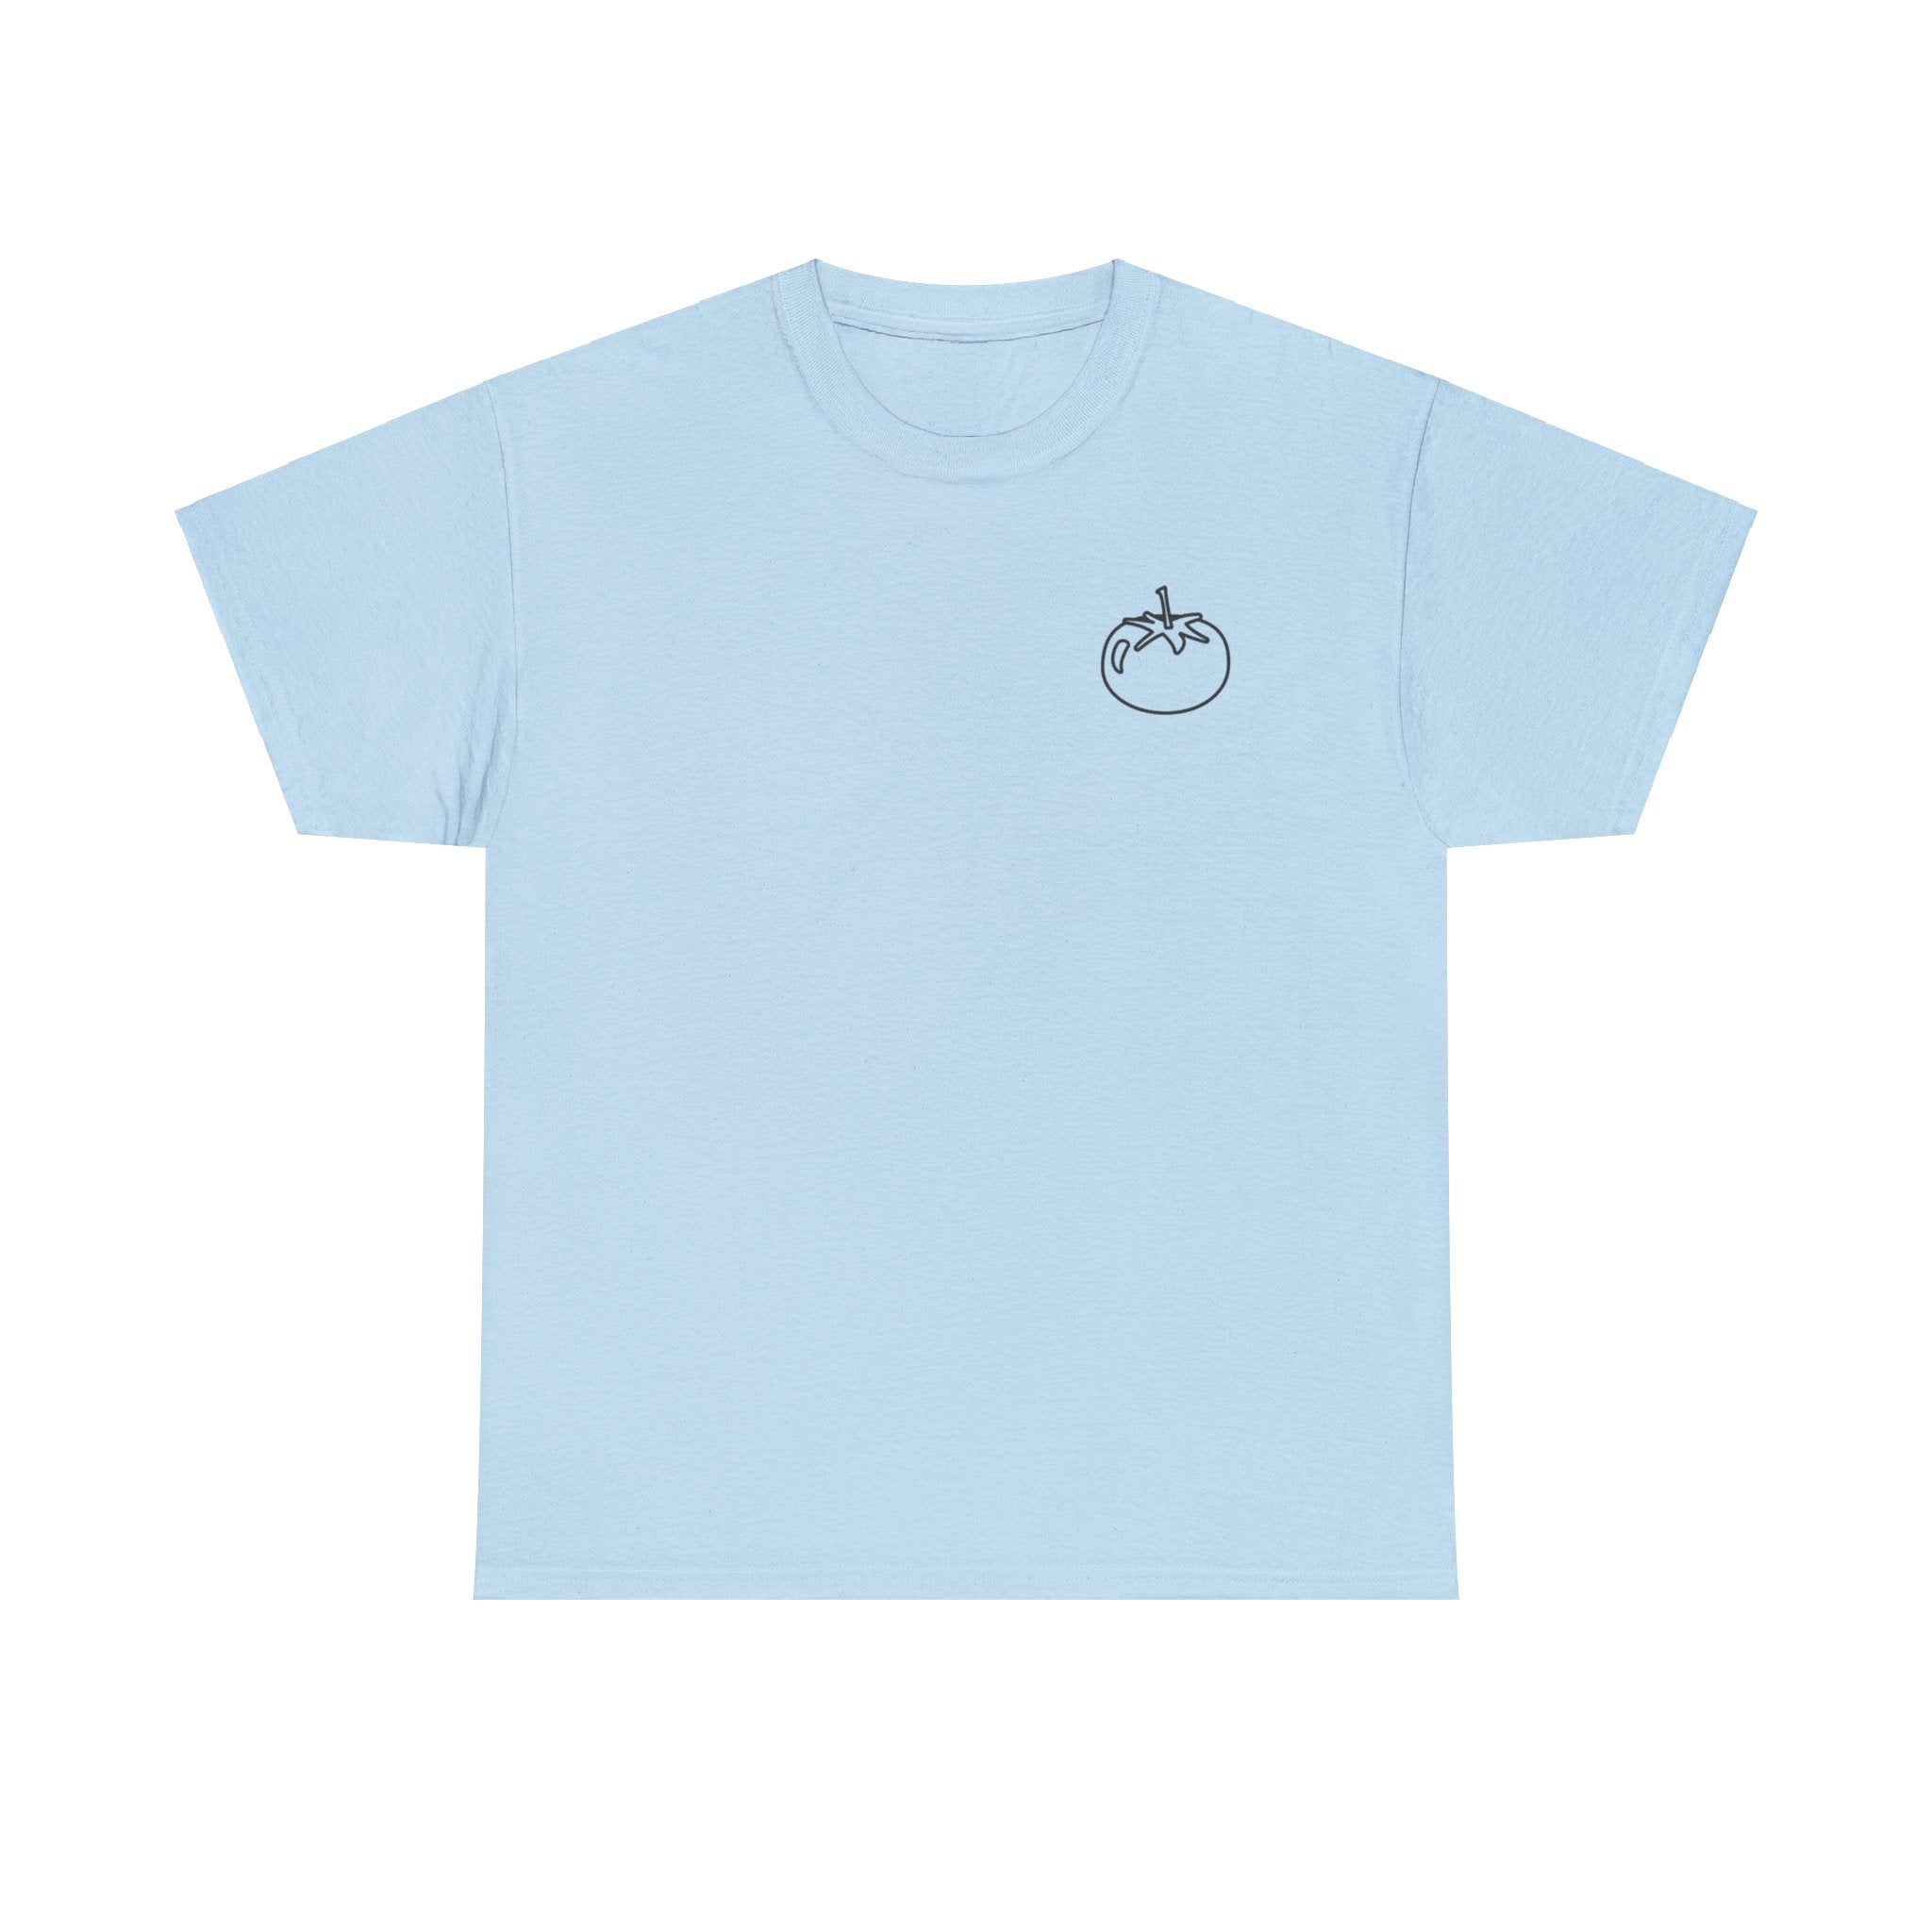 AUS - Tomato T-shirt